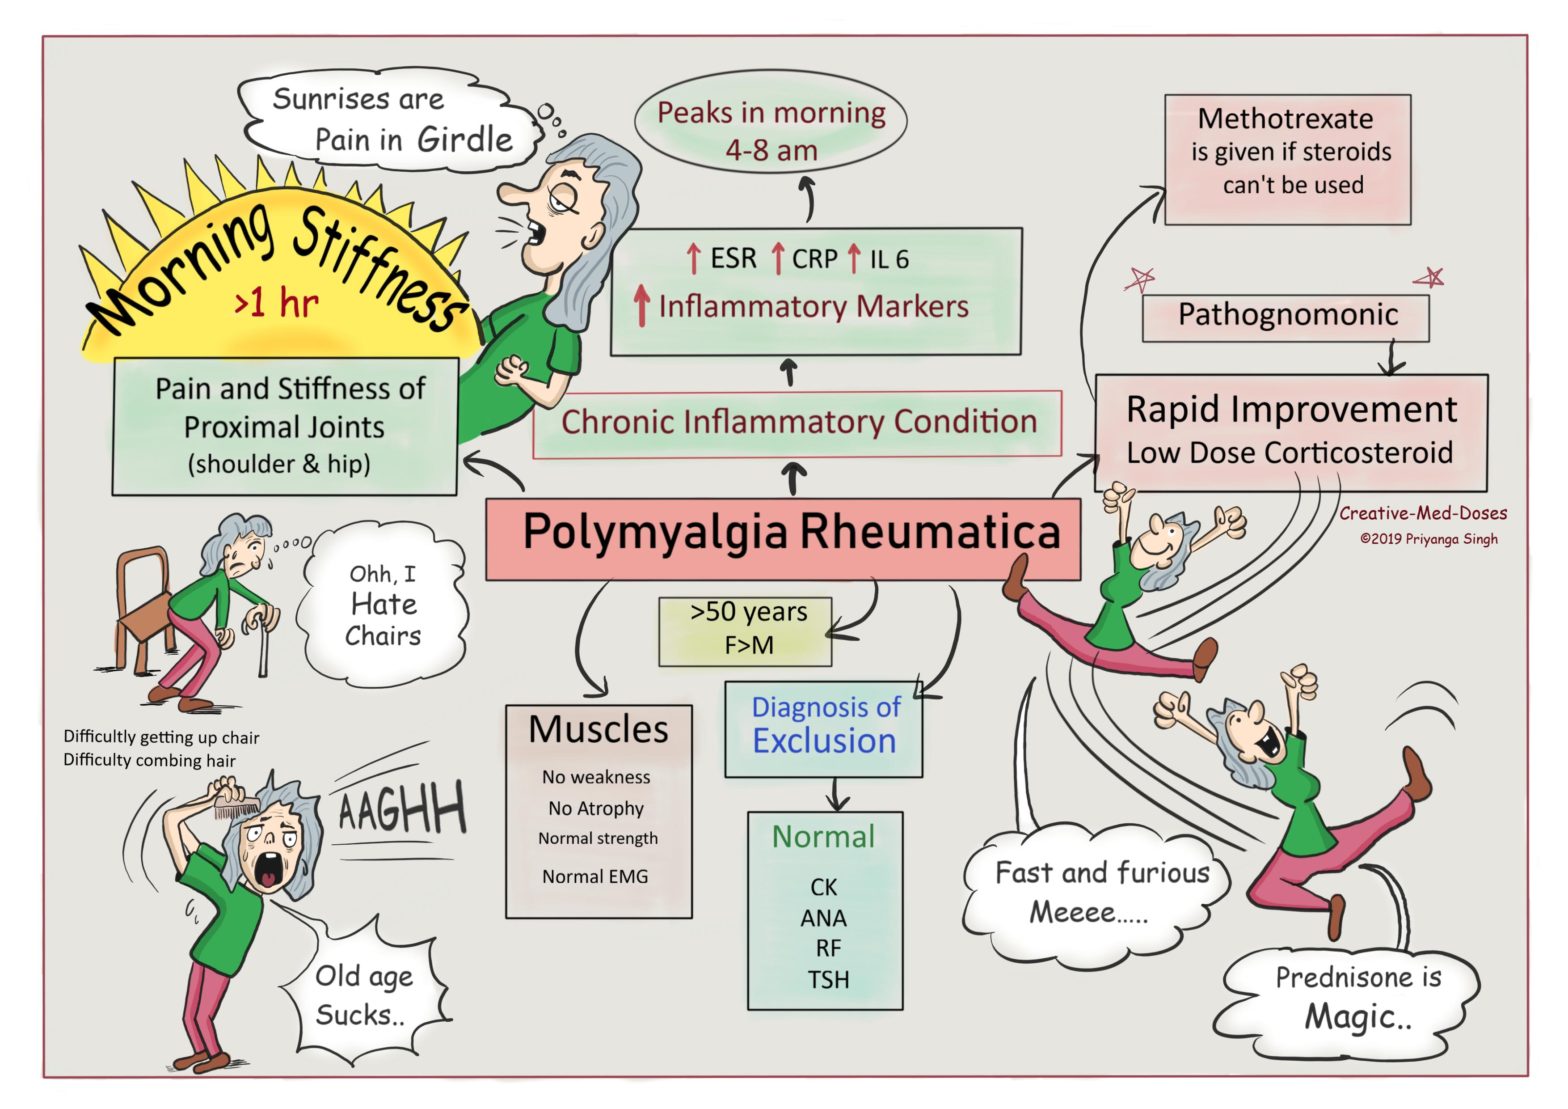 Polymyalgia rheumatica clinical presentation and introduction